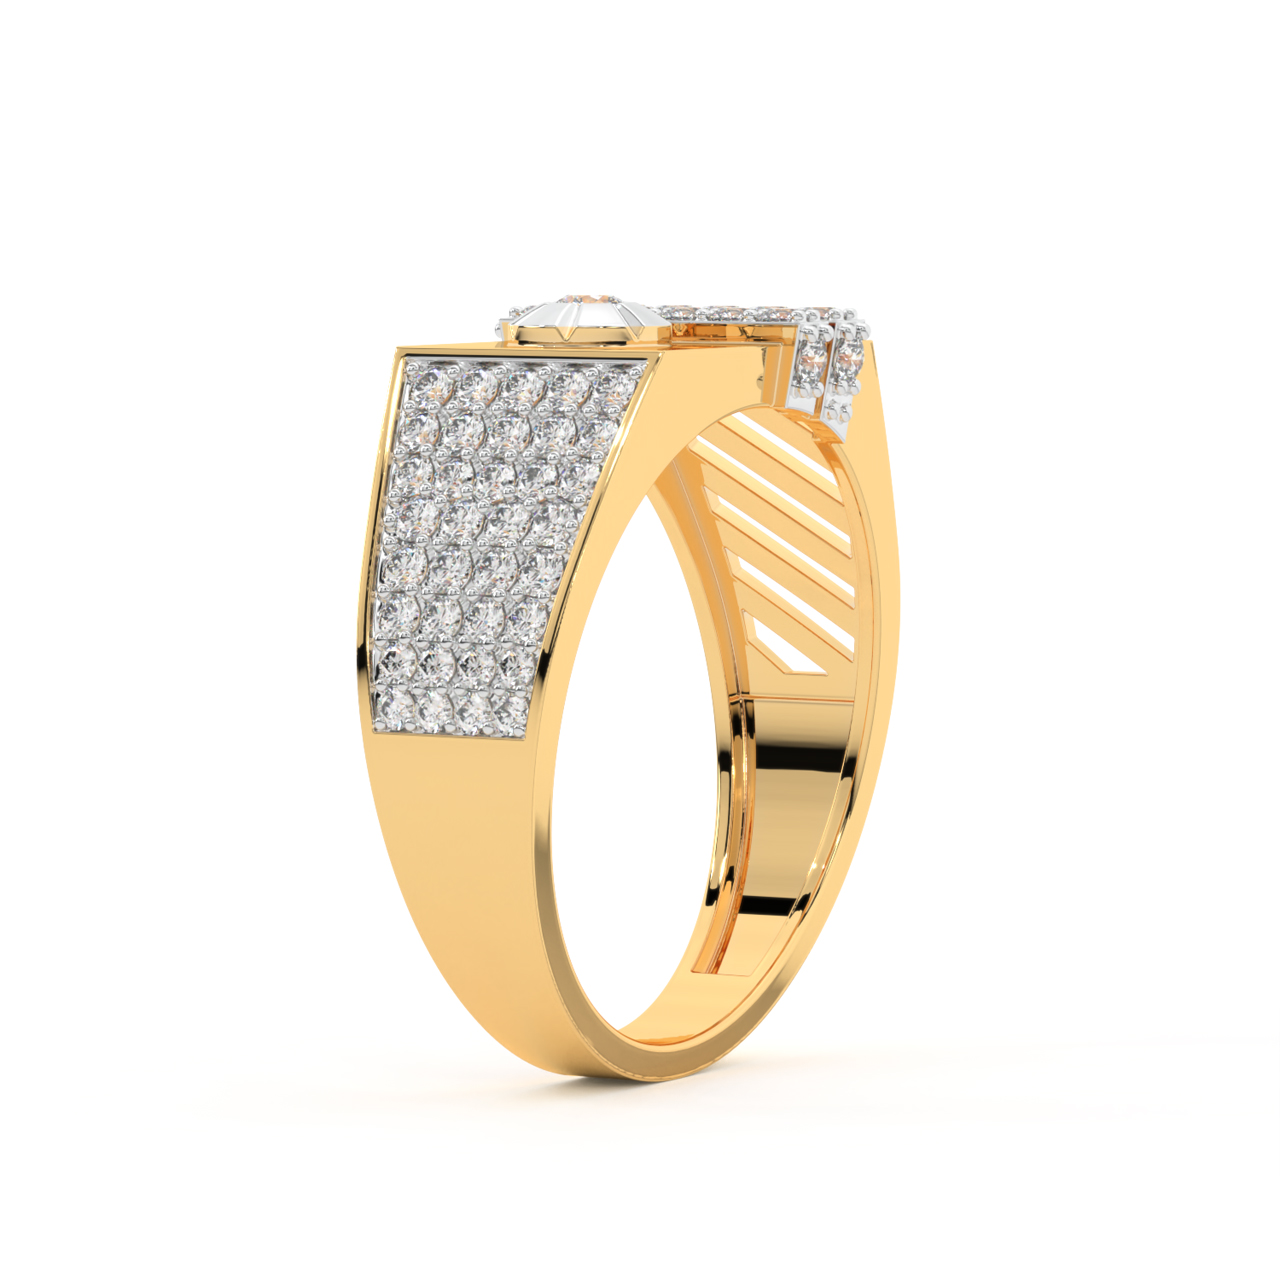 Buy Beautiful Impon Casting Plain Gold Ring Design Buy Online